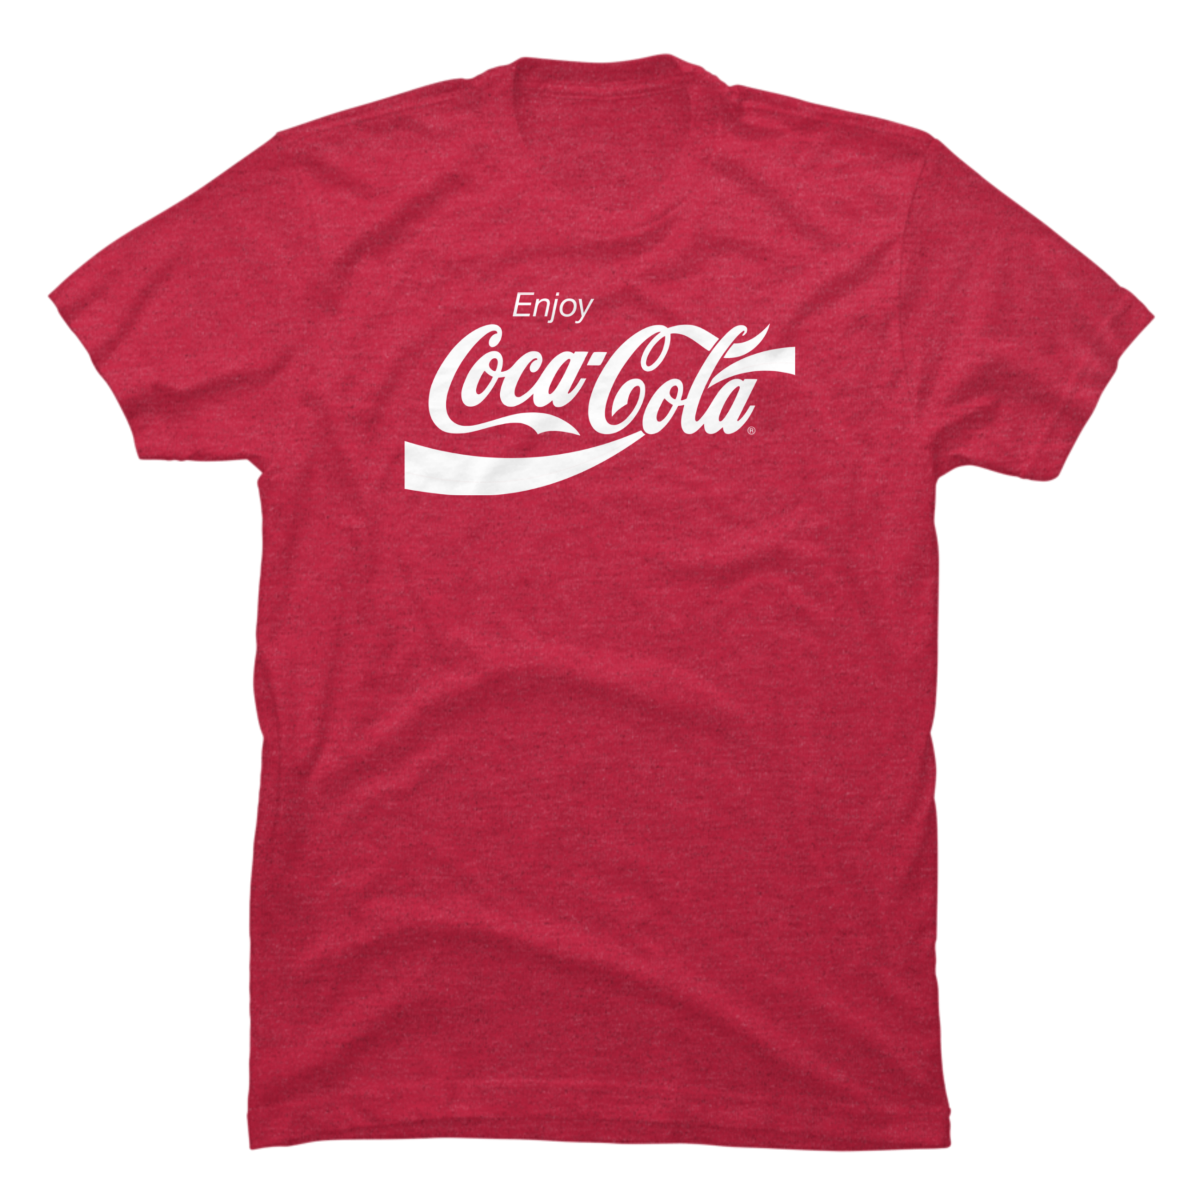 coca cola t shirts for sale